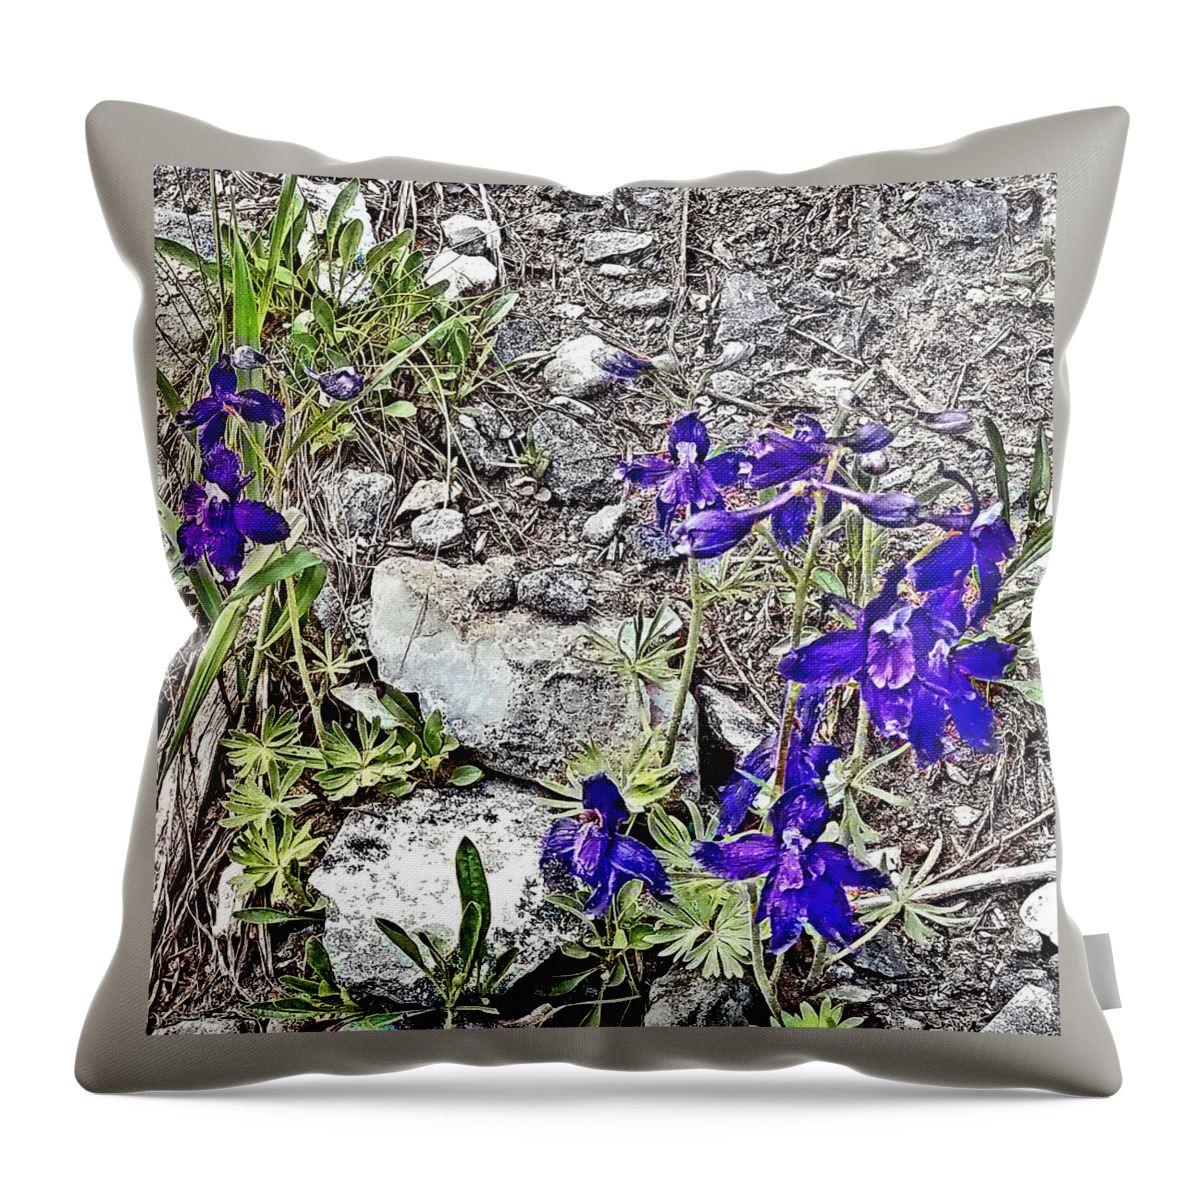 Kings Hill Throw Pillow featuring the digital art Purple Survivors by Susan Kinney